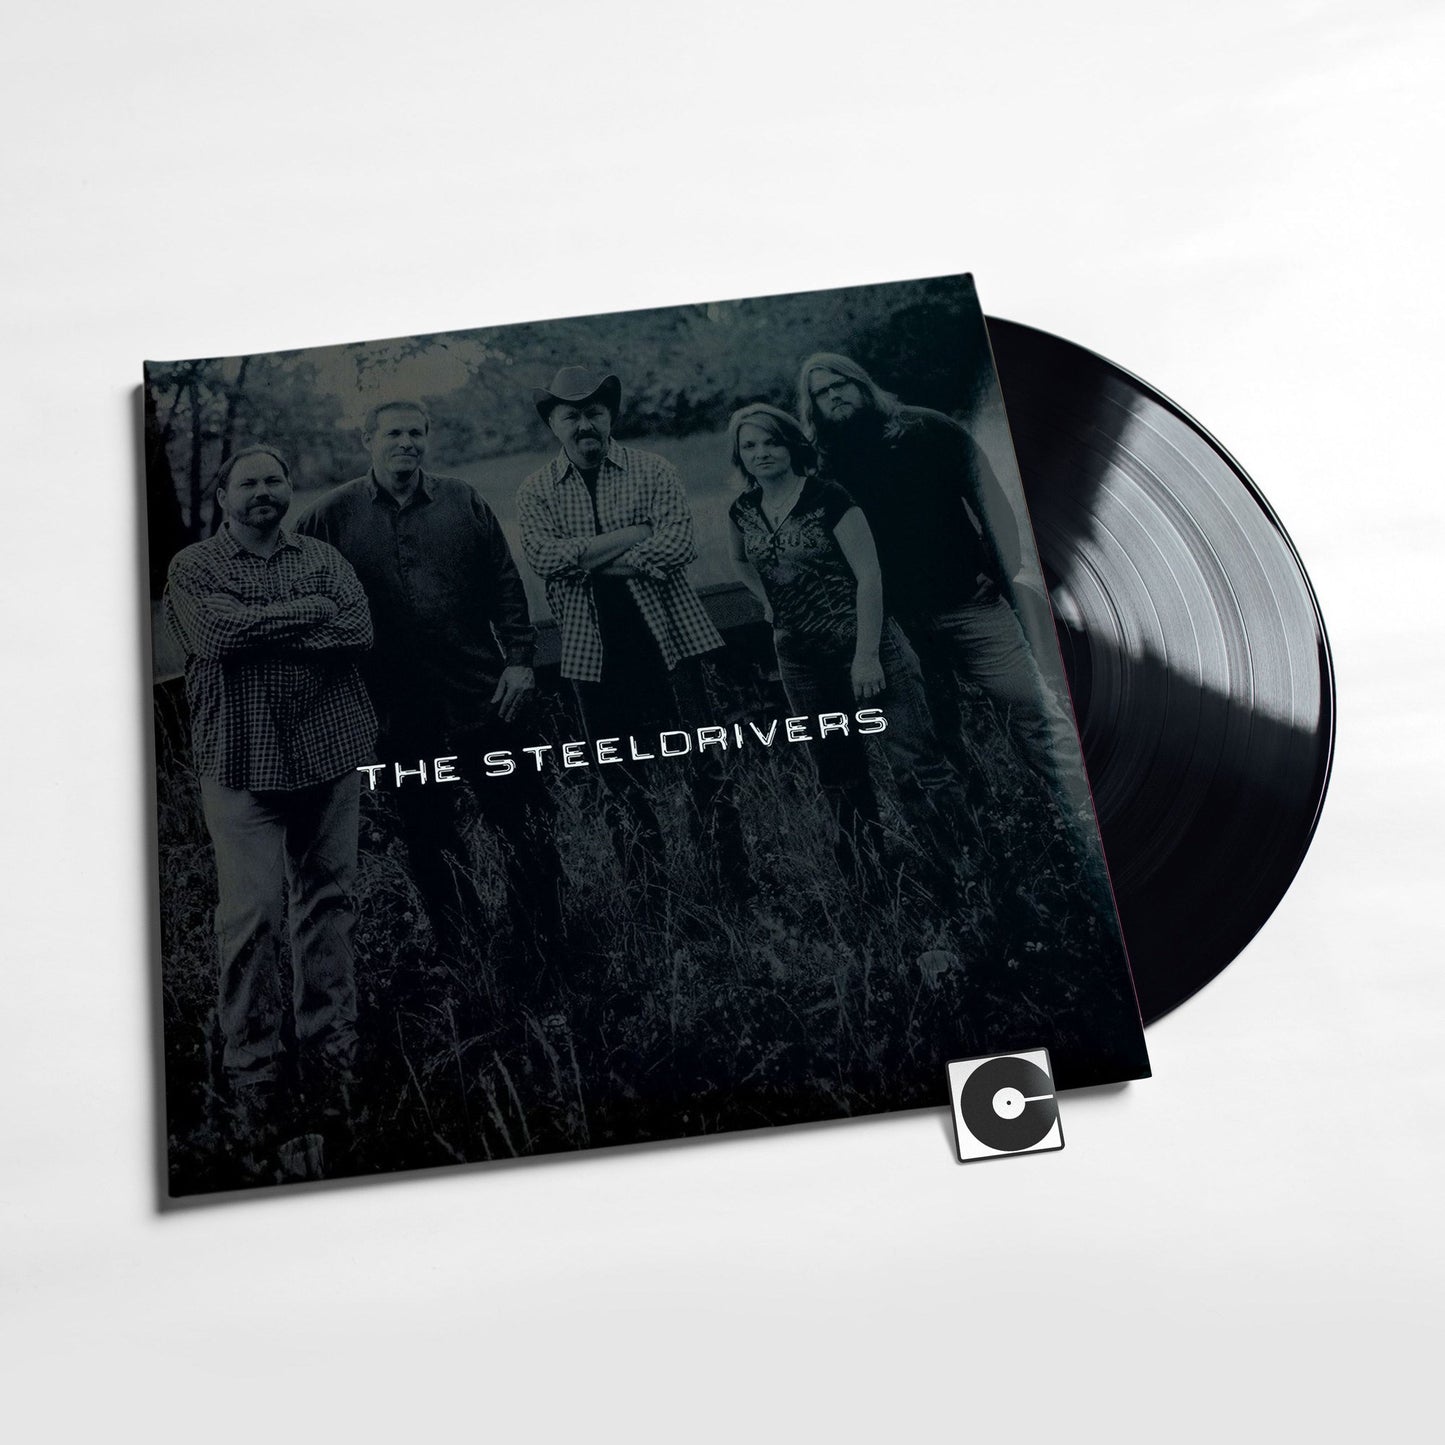 The Steeldrivers - "The Steeldriver"